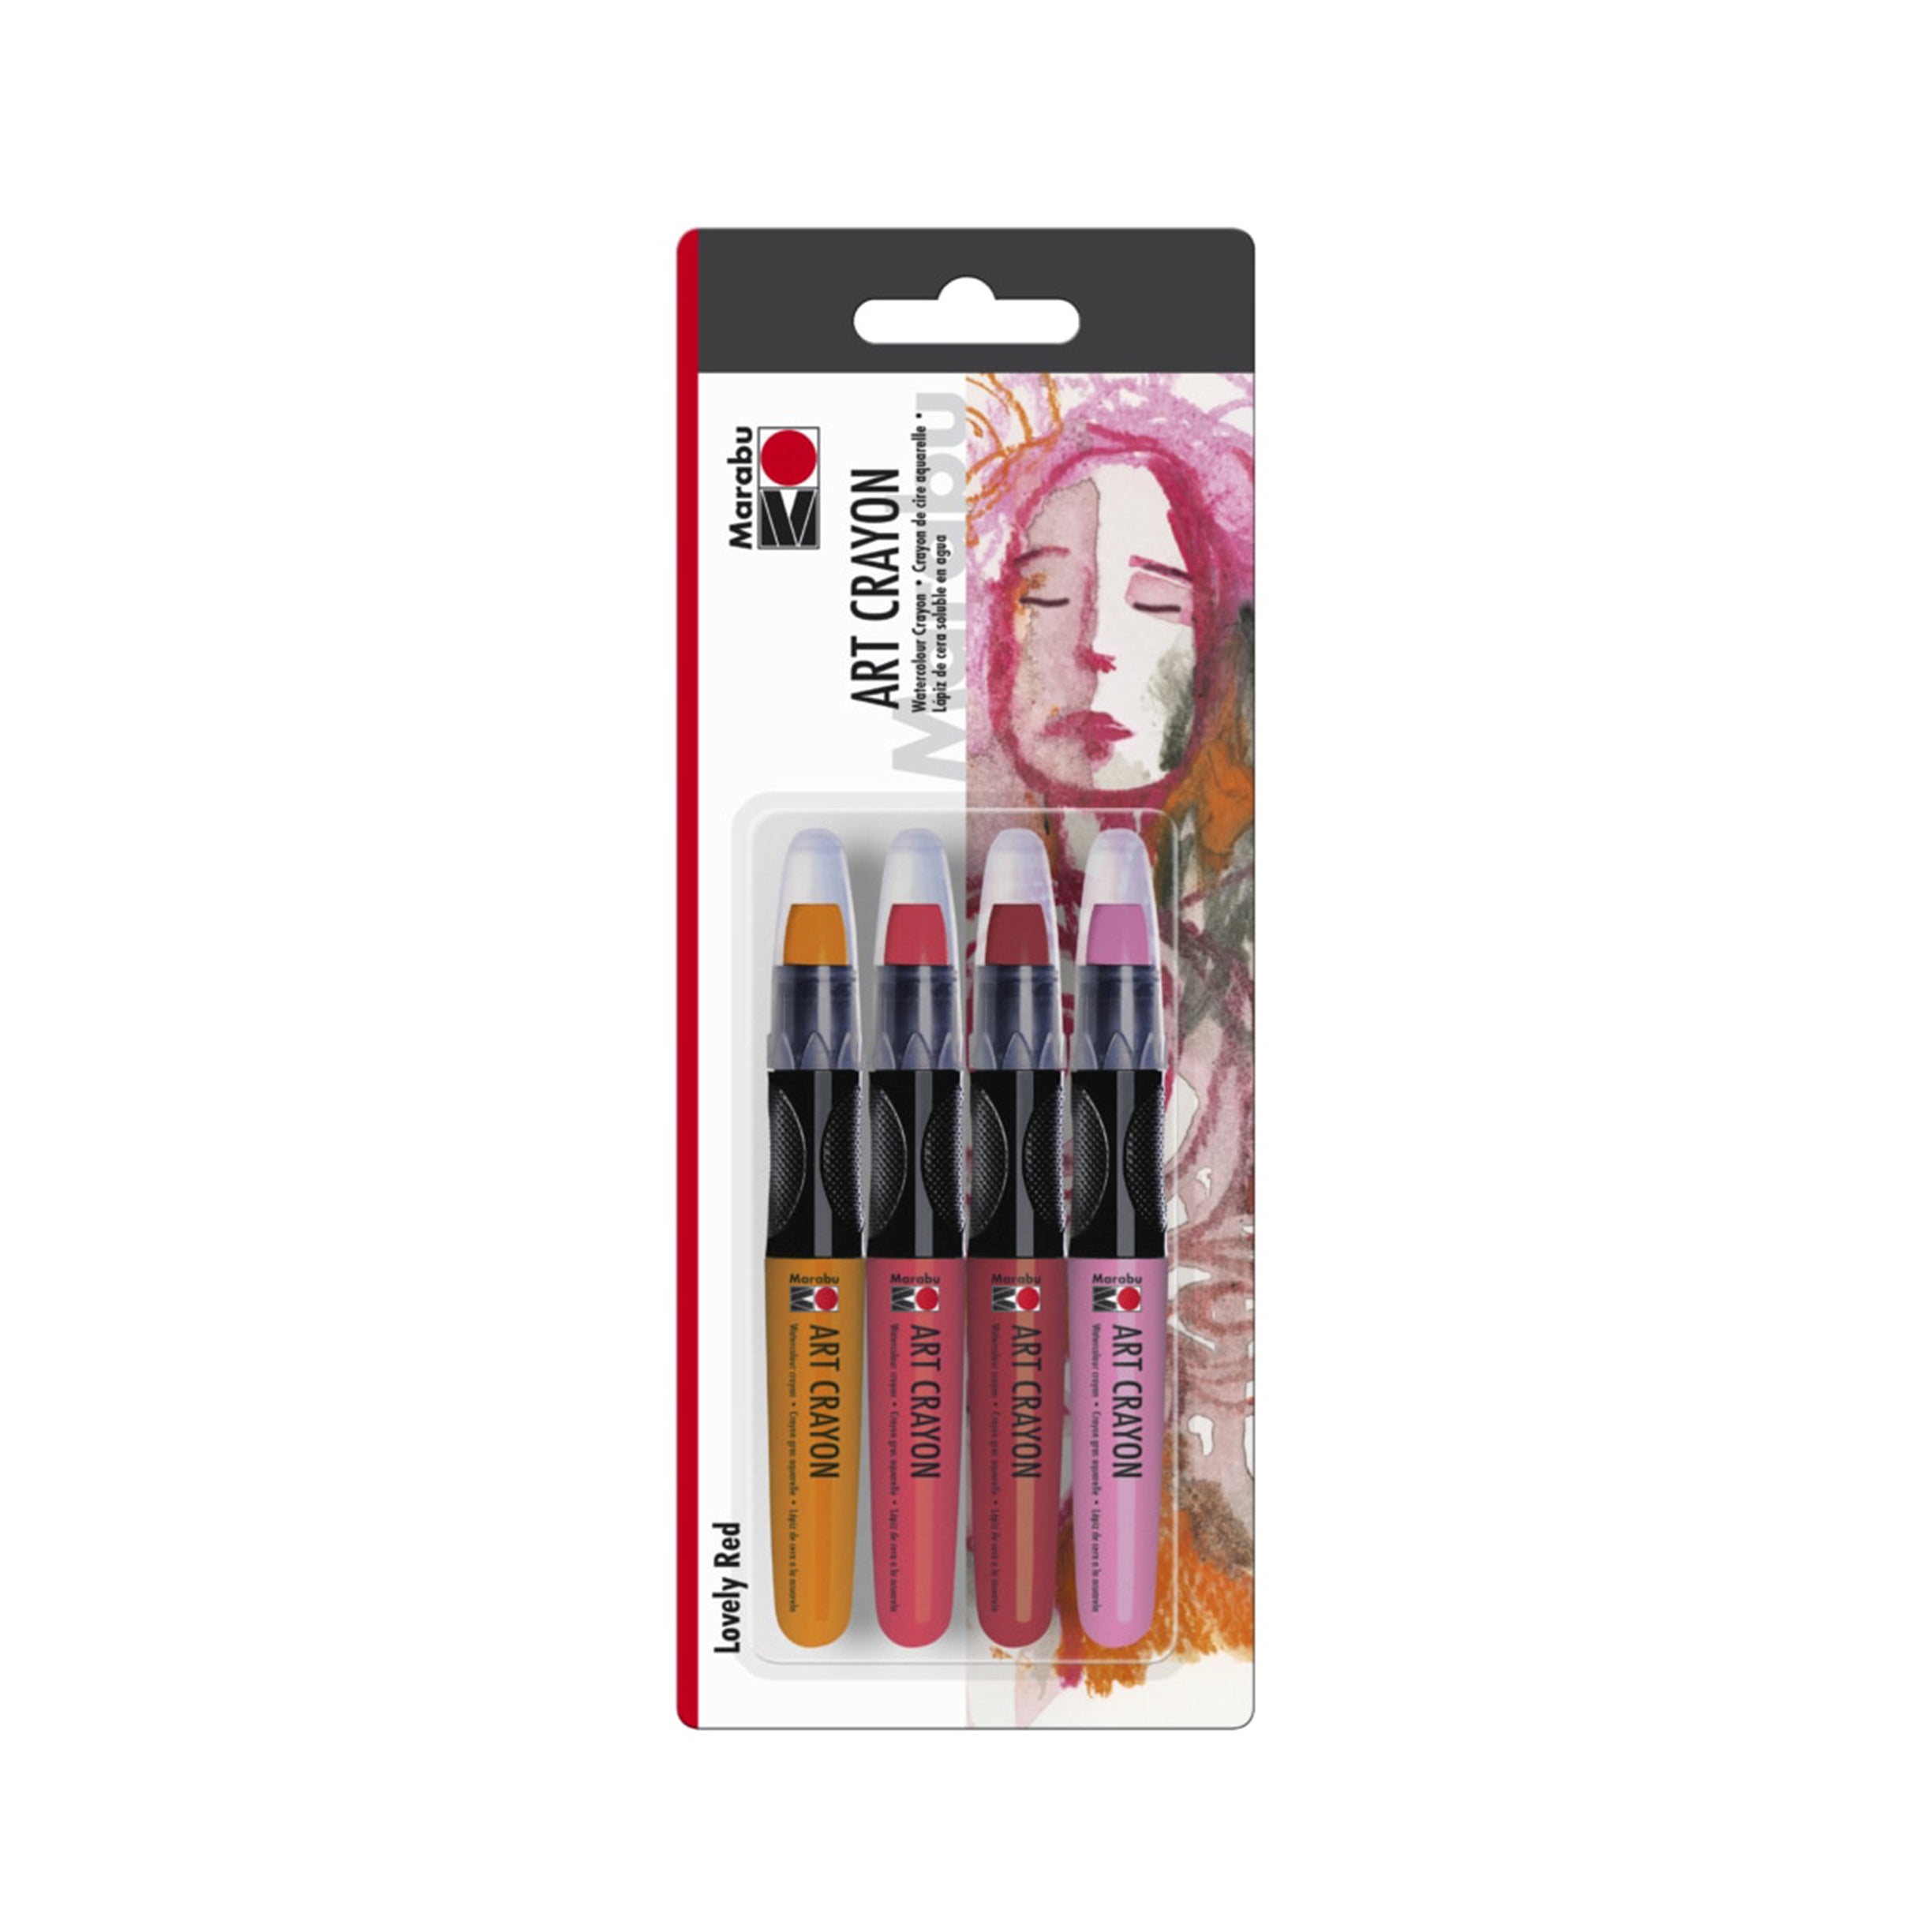 Marabu Mixed Media Art Crayons, Lovely Red Set of 4